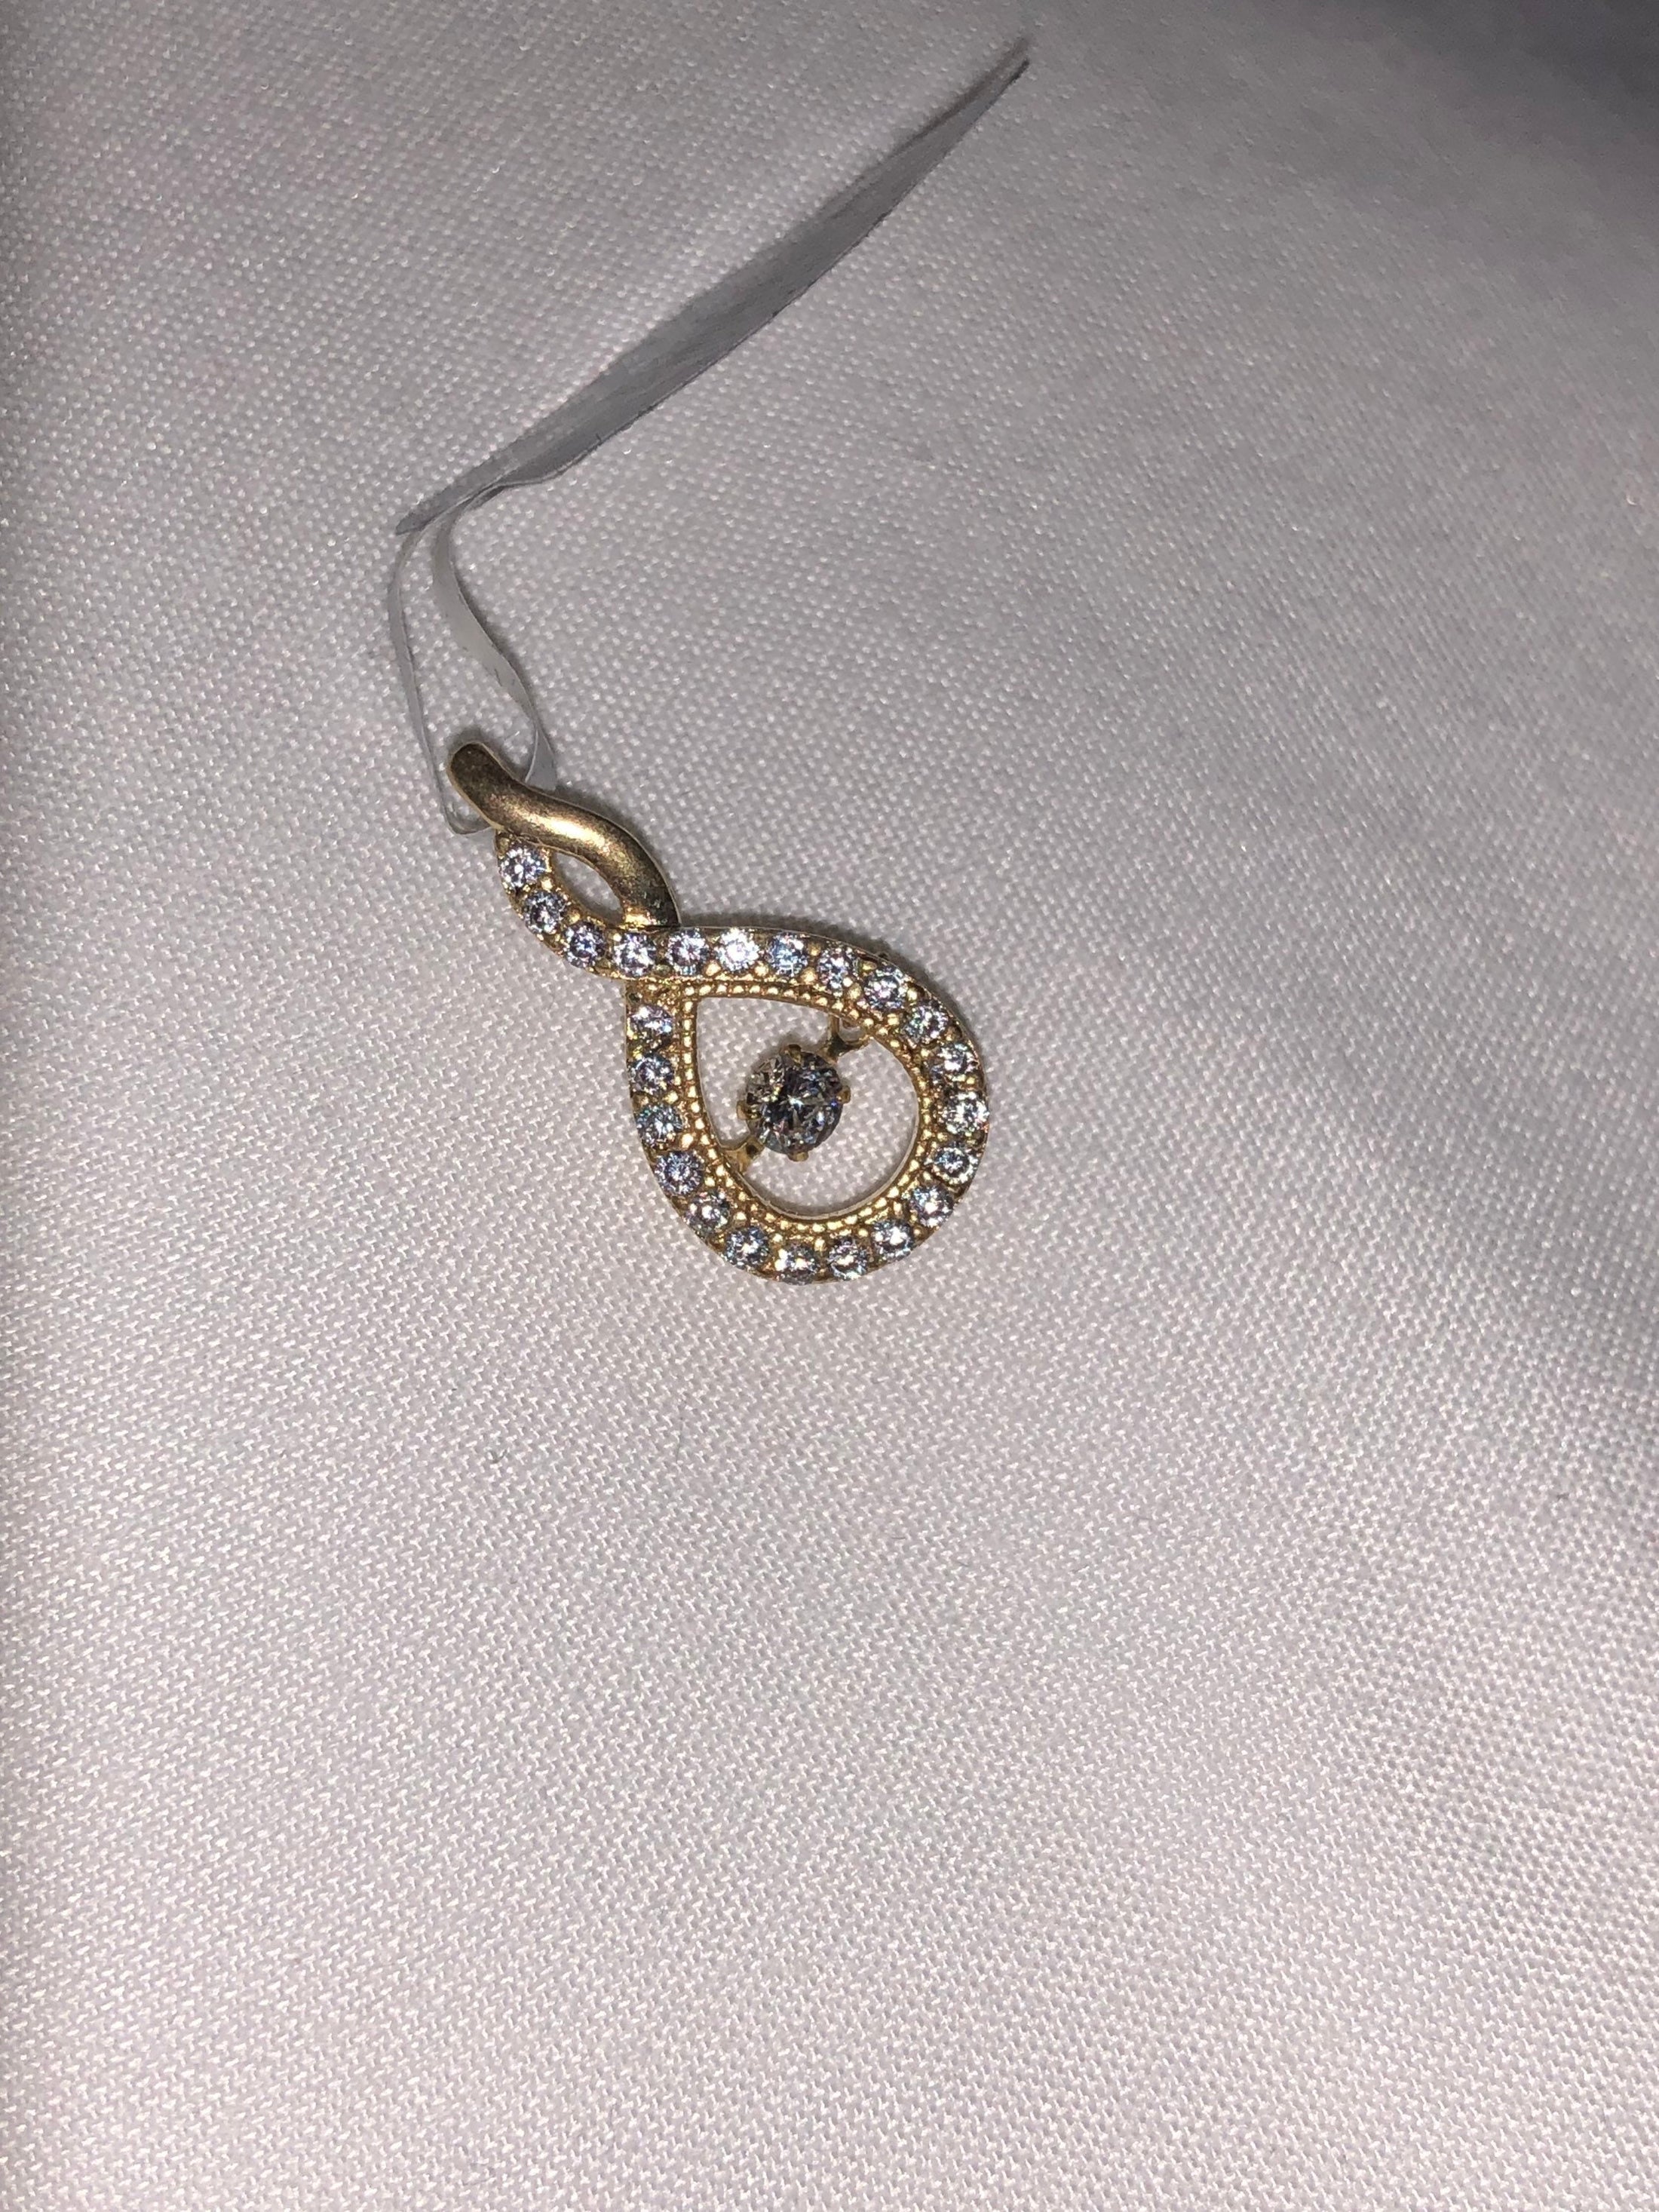 Beautiful VVS clarity Swarovski Crystal dancing diamond pendant, mesmerizing beautiful gift for women, dances and sparkles when worn